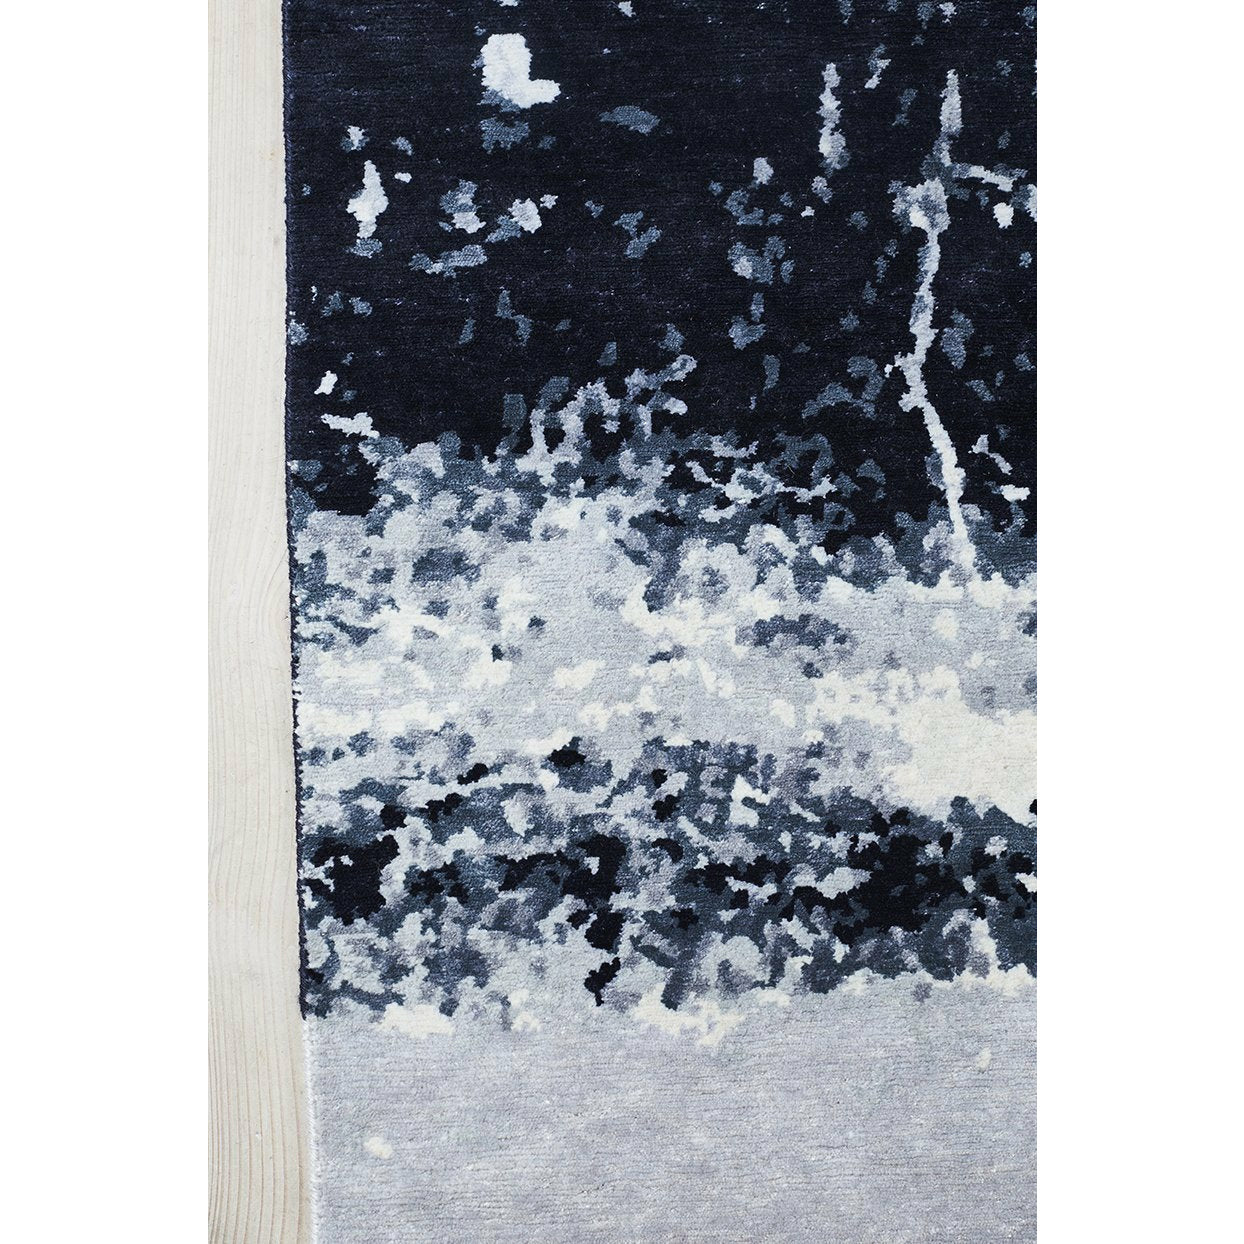 Massimo Stardust Rag Blue Earth Bamboo, 200x300 cm